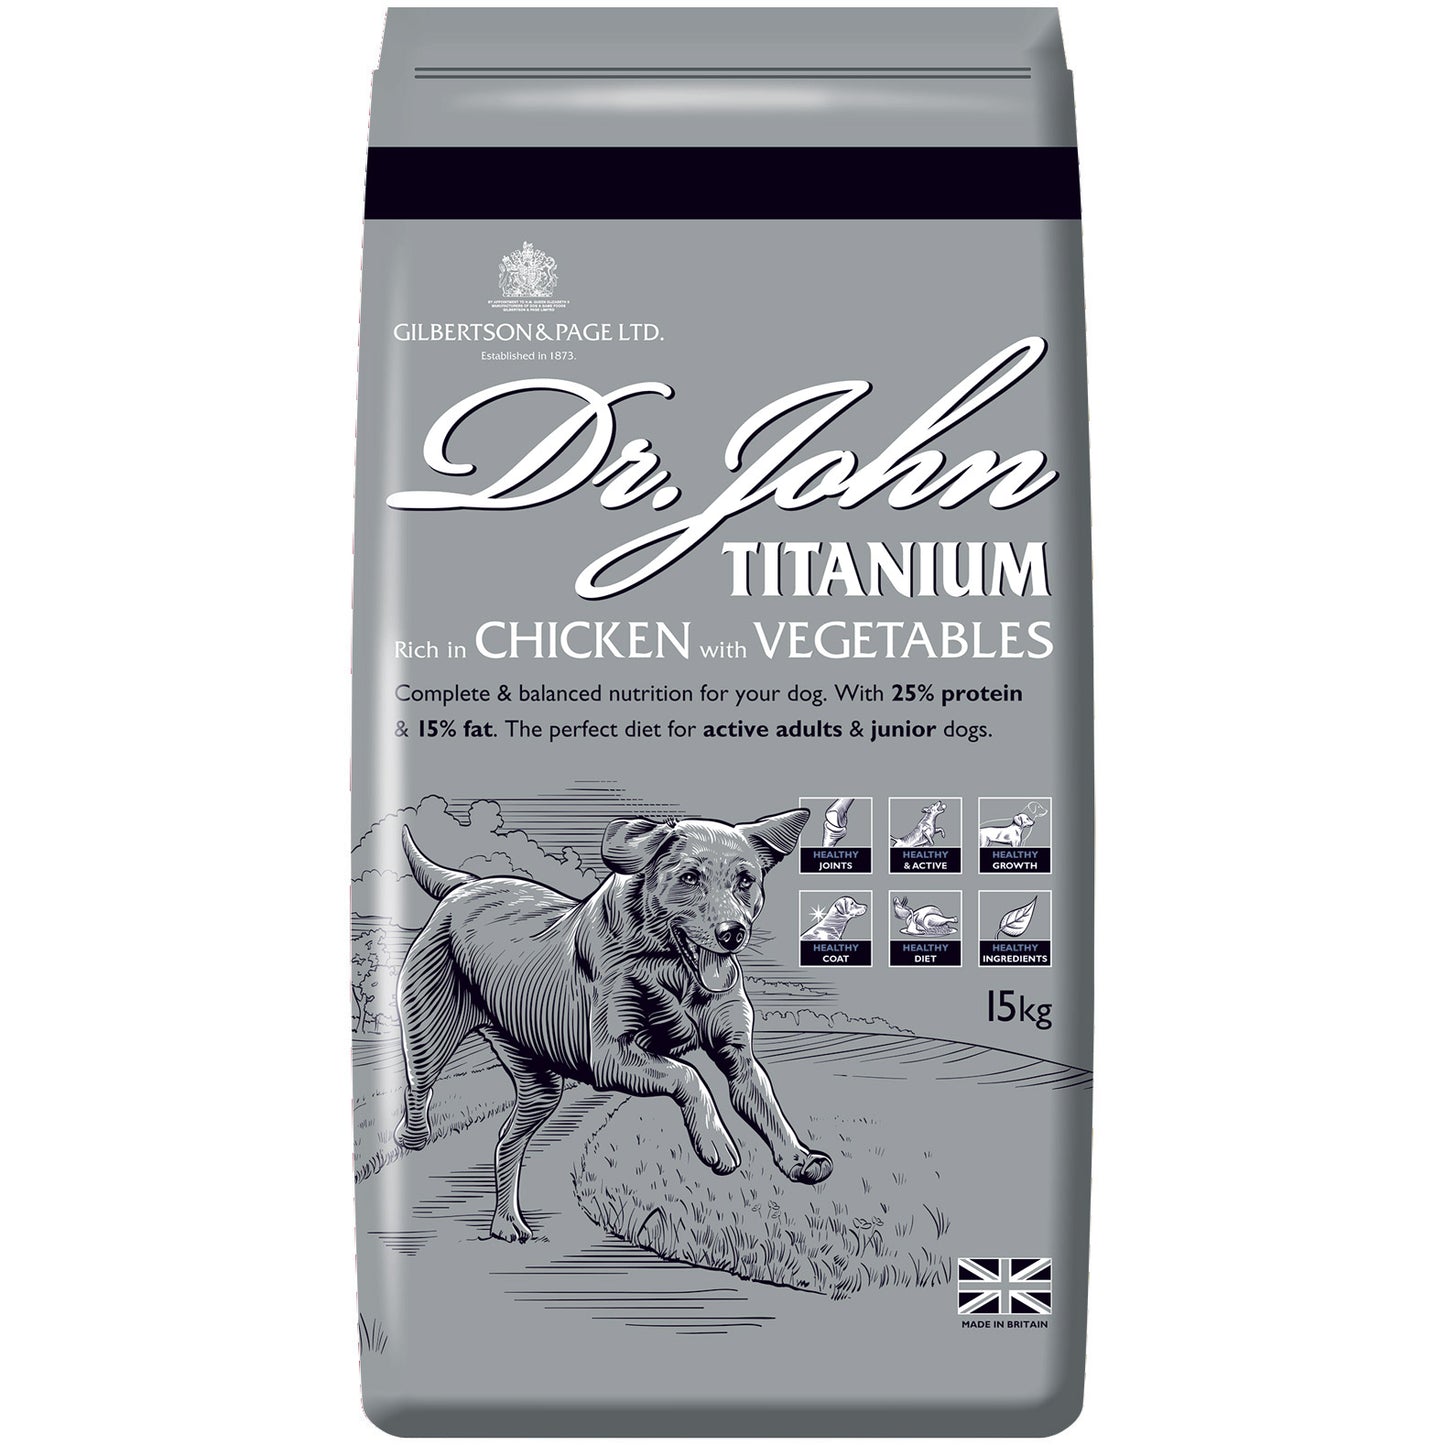 Dr John Titanium Dog Food 15Kg